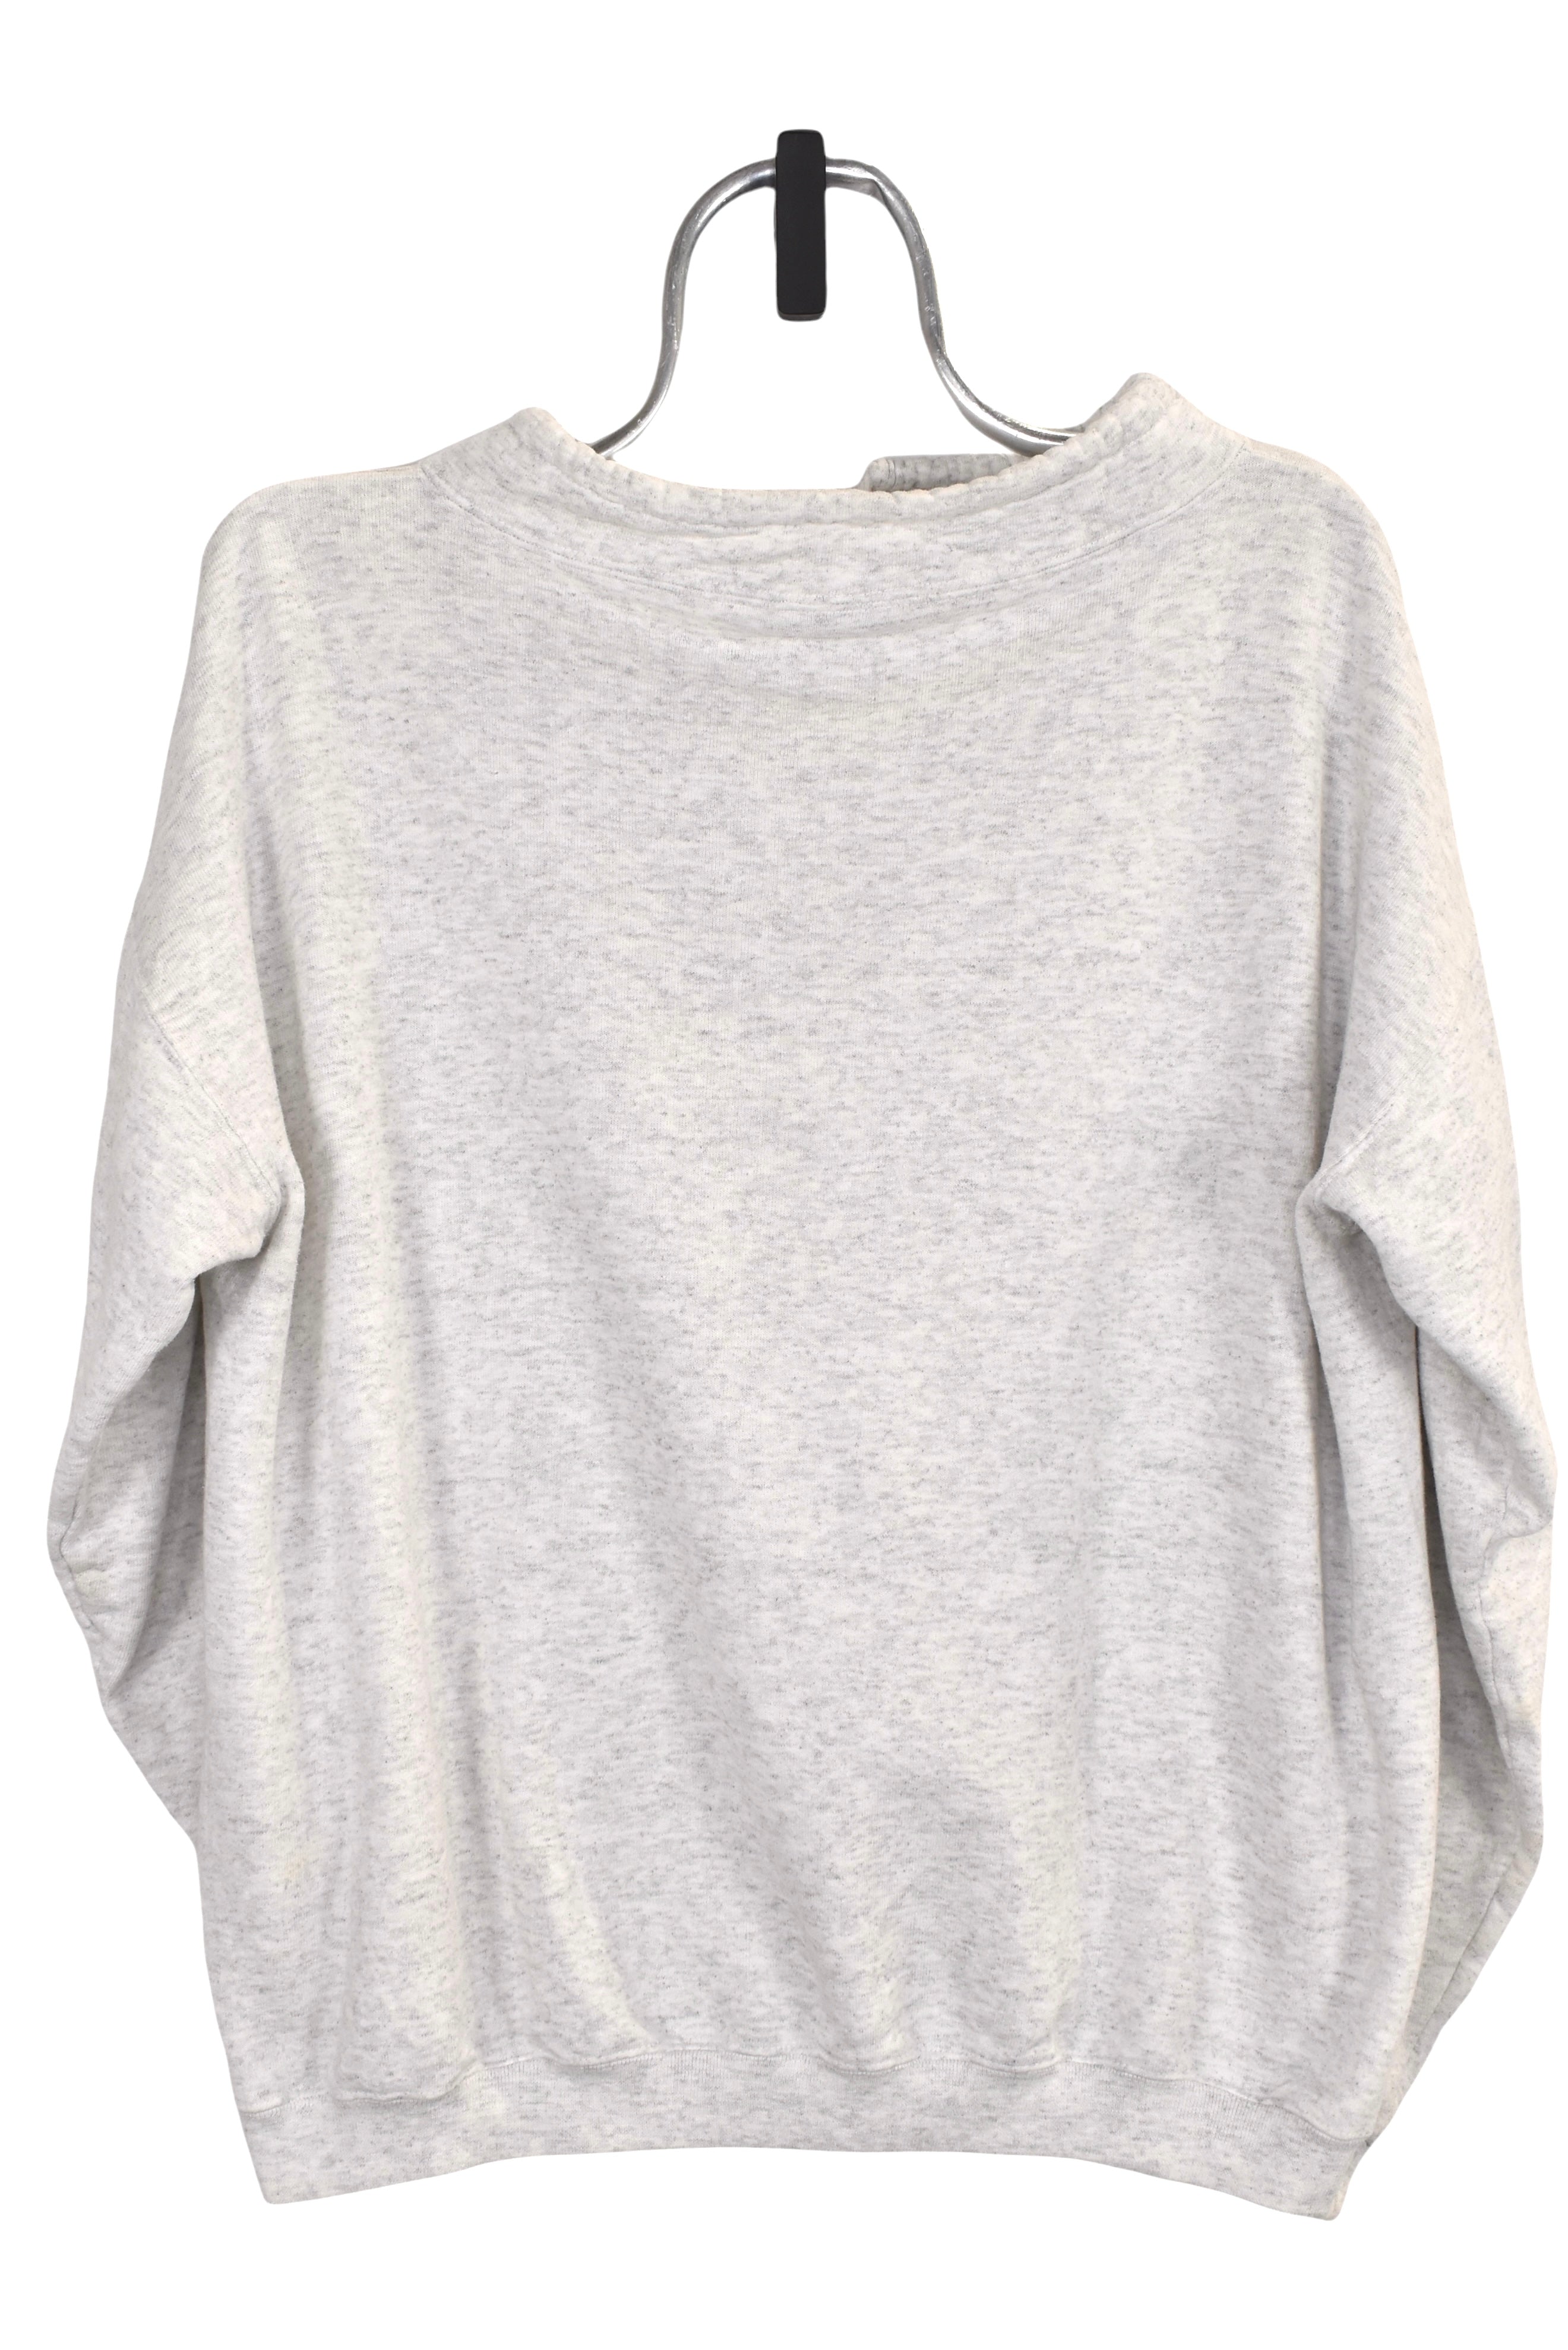 Vintage Epcot Center sweatshirt (L), grey Disney 1/4 zip jumper